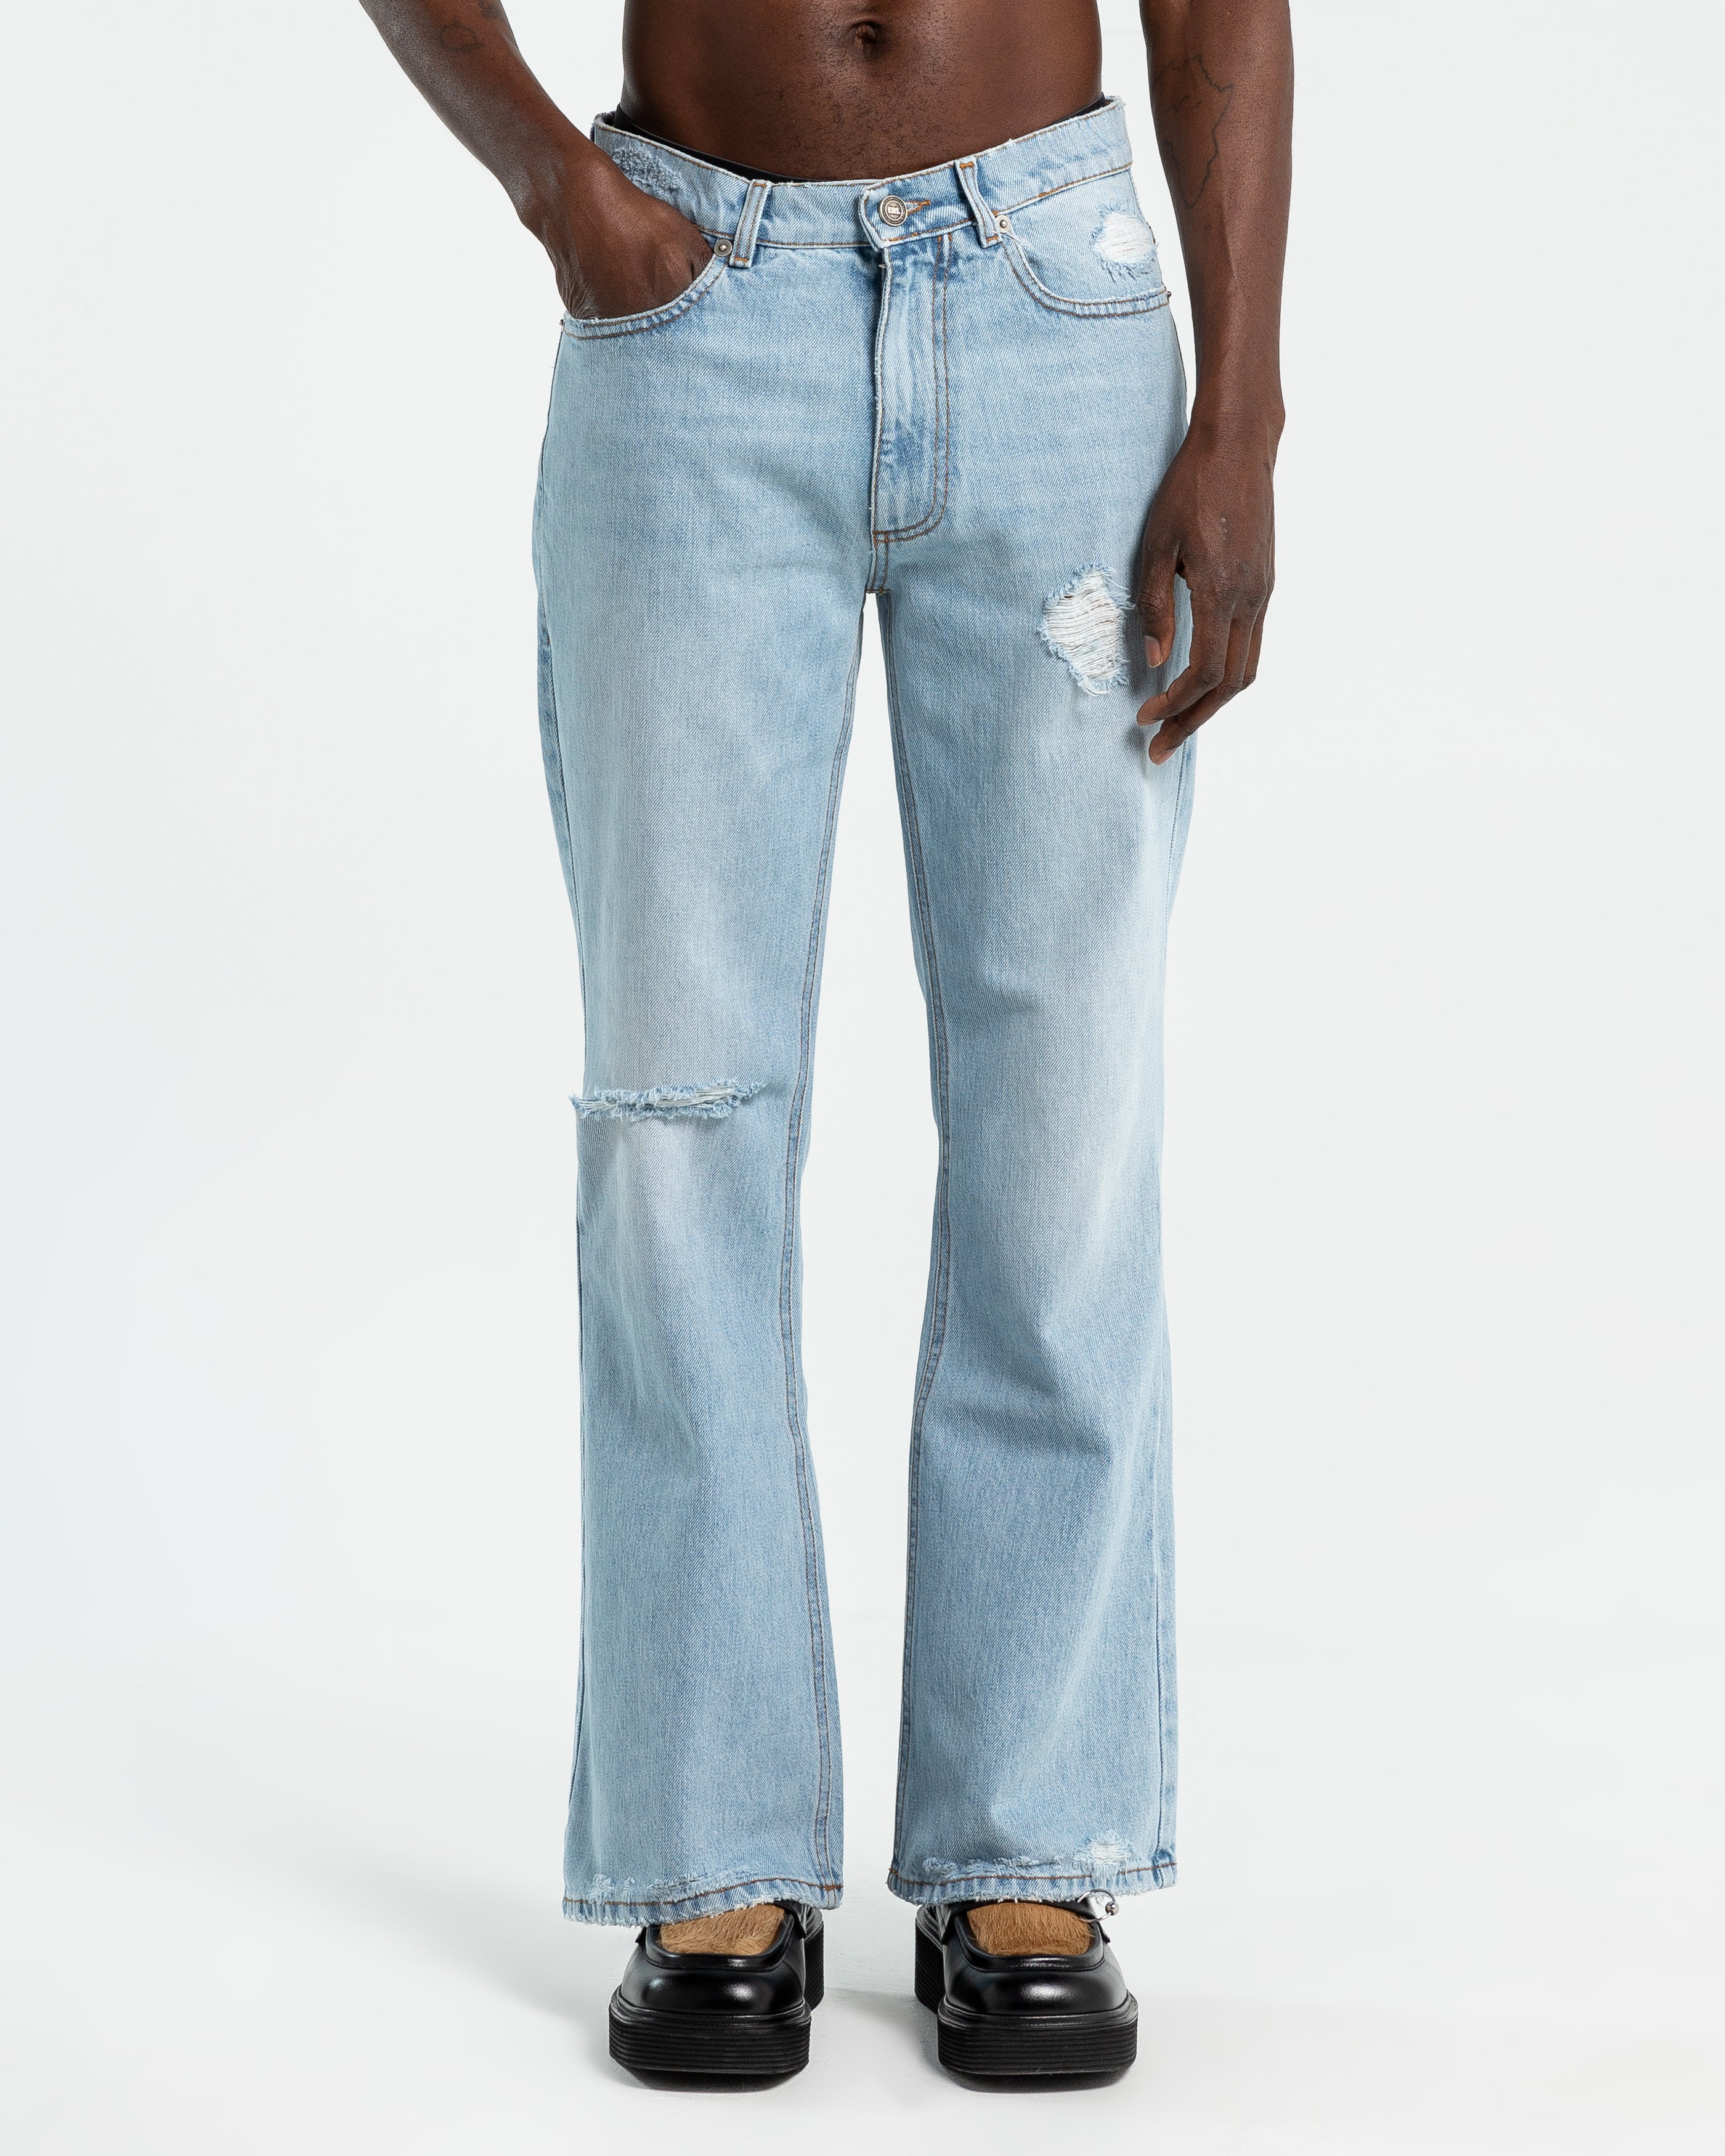 Jalioing Women's Ripped Jeans Mid Rise with Belt Straight Leg Rolled Bottom  Pocket Distressed Denim Pants (Medium, Blue) - Walmart.com